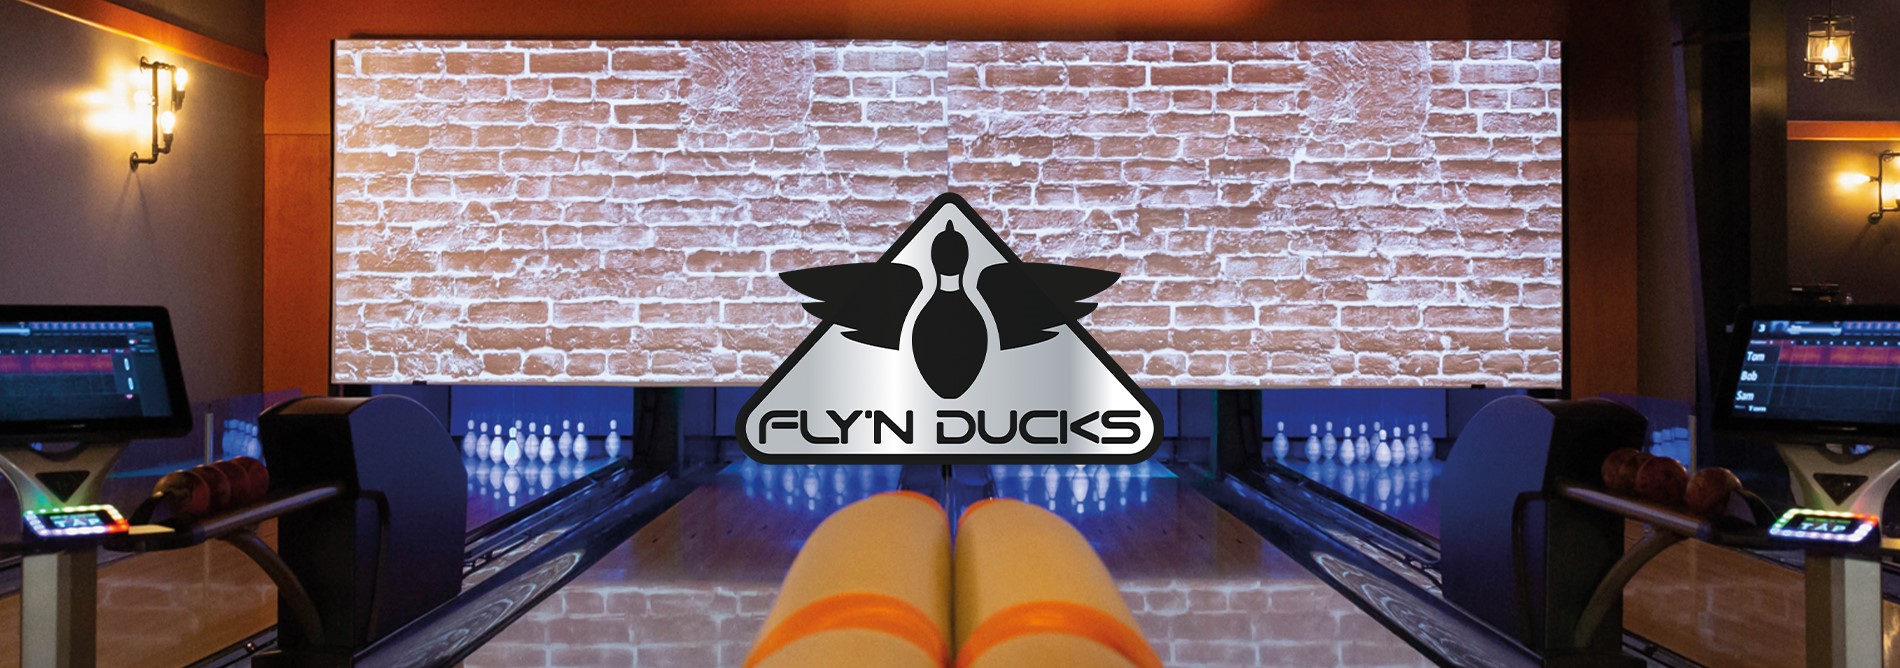 flyn ducks banner home qubicaamf.jpg